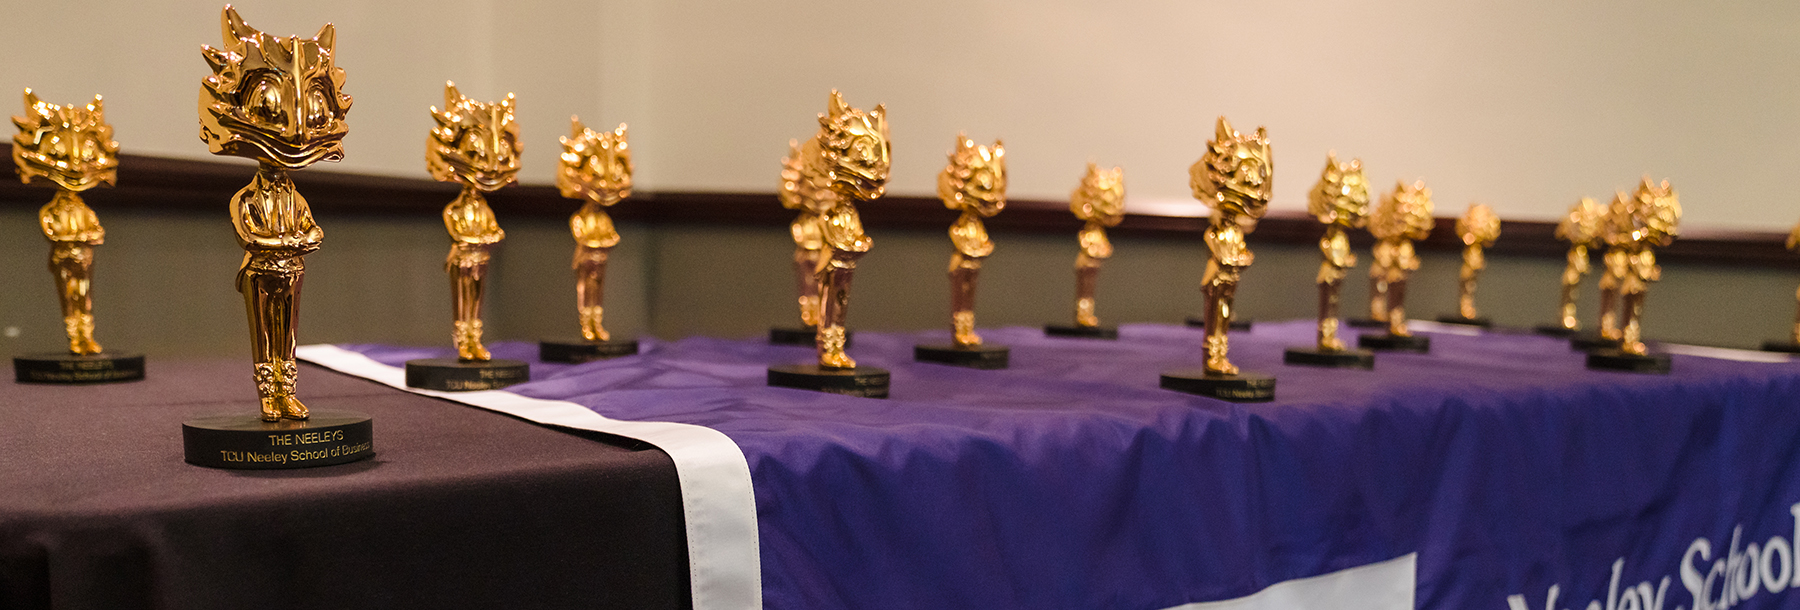 Section Image: Neeley awards on display table 